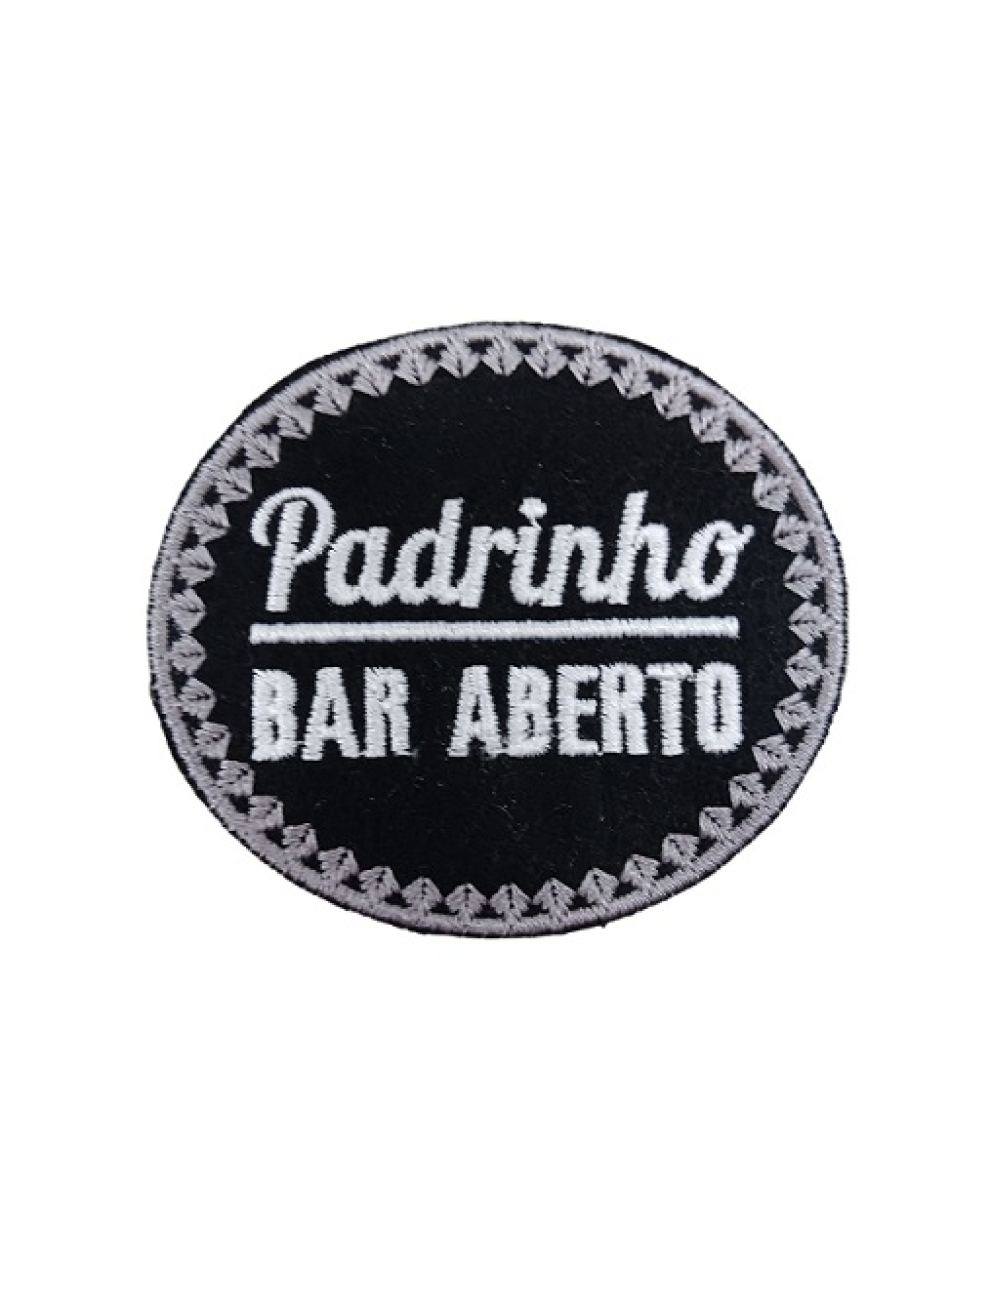 Padrinho Bar Aberto